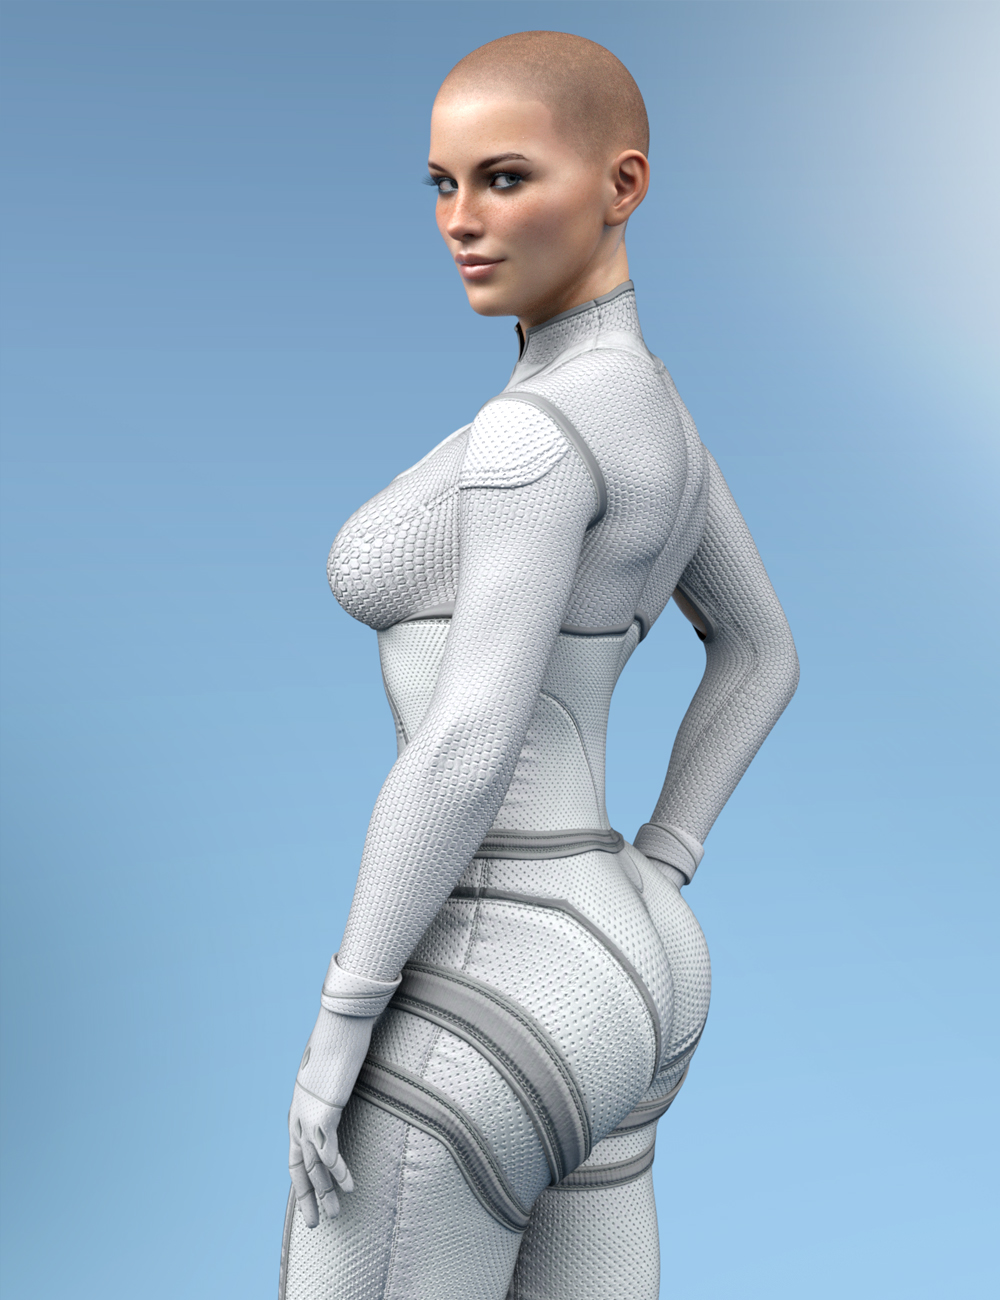 X Fashion Sci Bodysuit 09 For Genesis 8 Females Daz 3d 6301